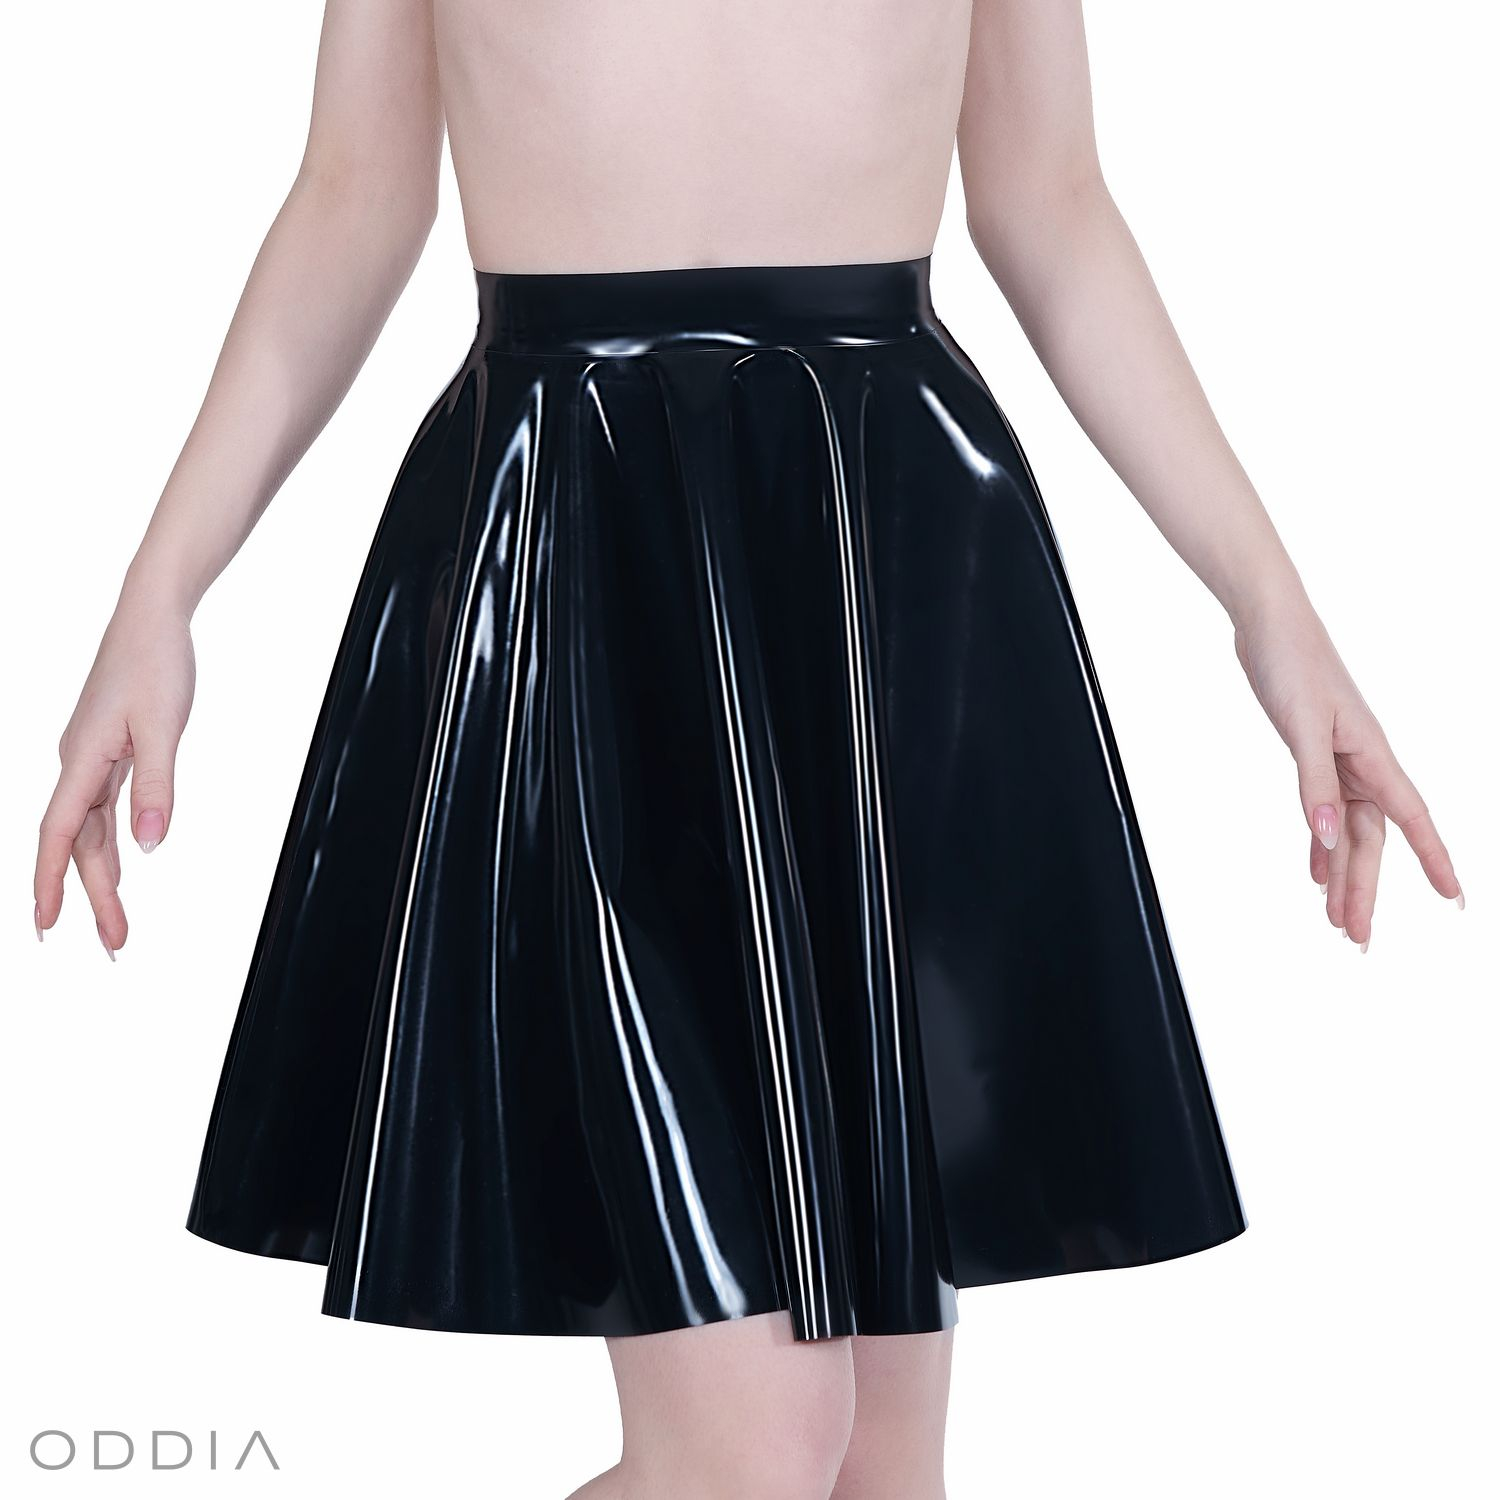 A knee-length latex circle skirt in black colour